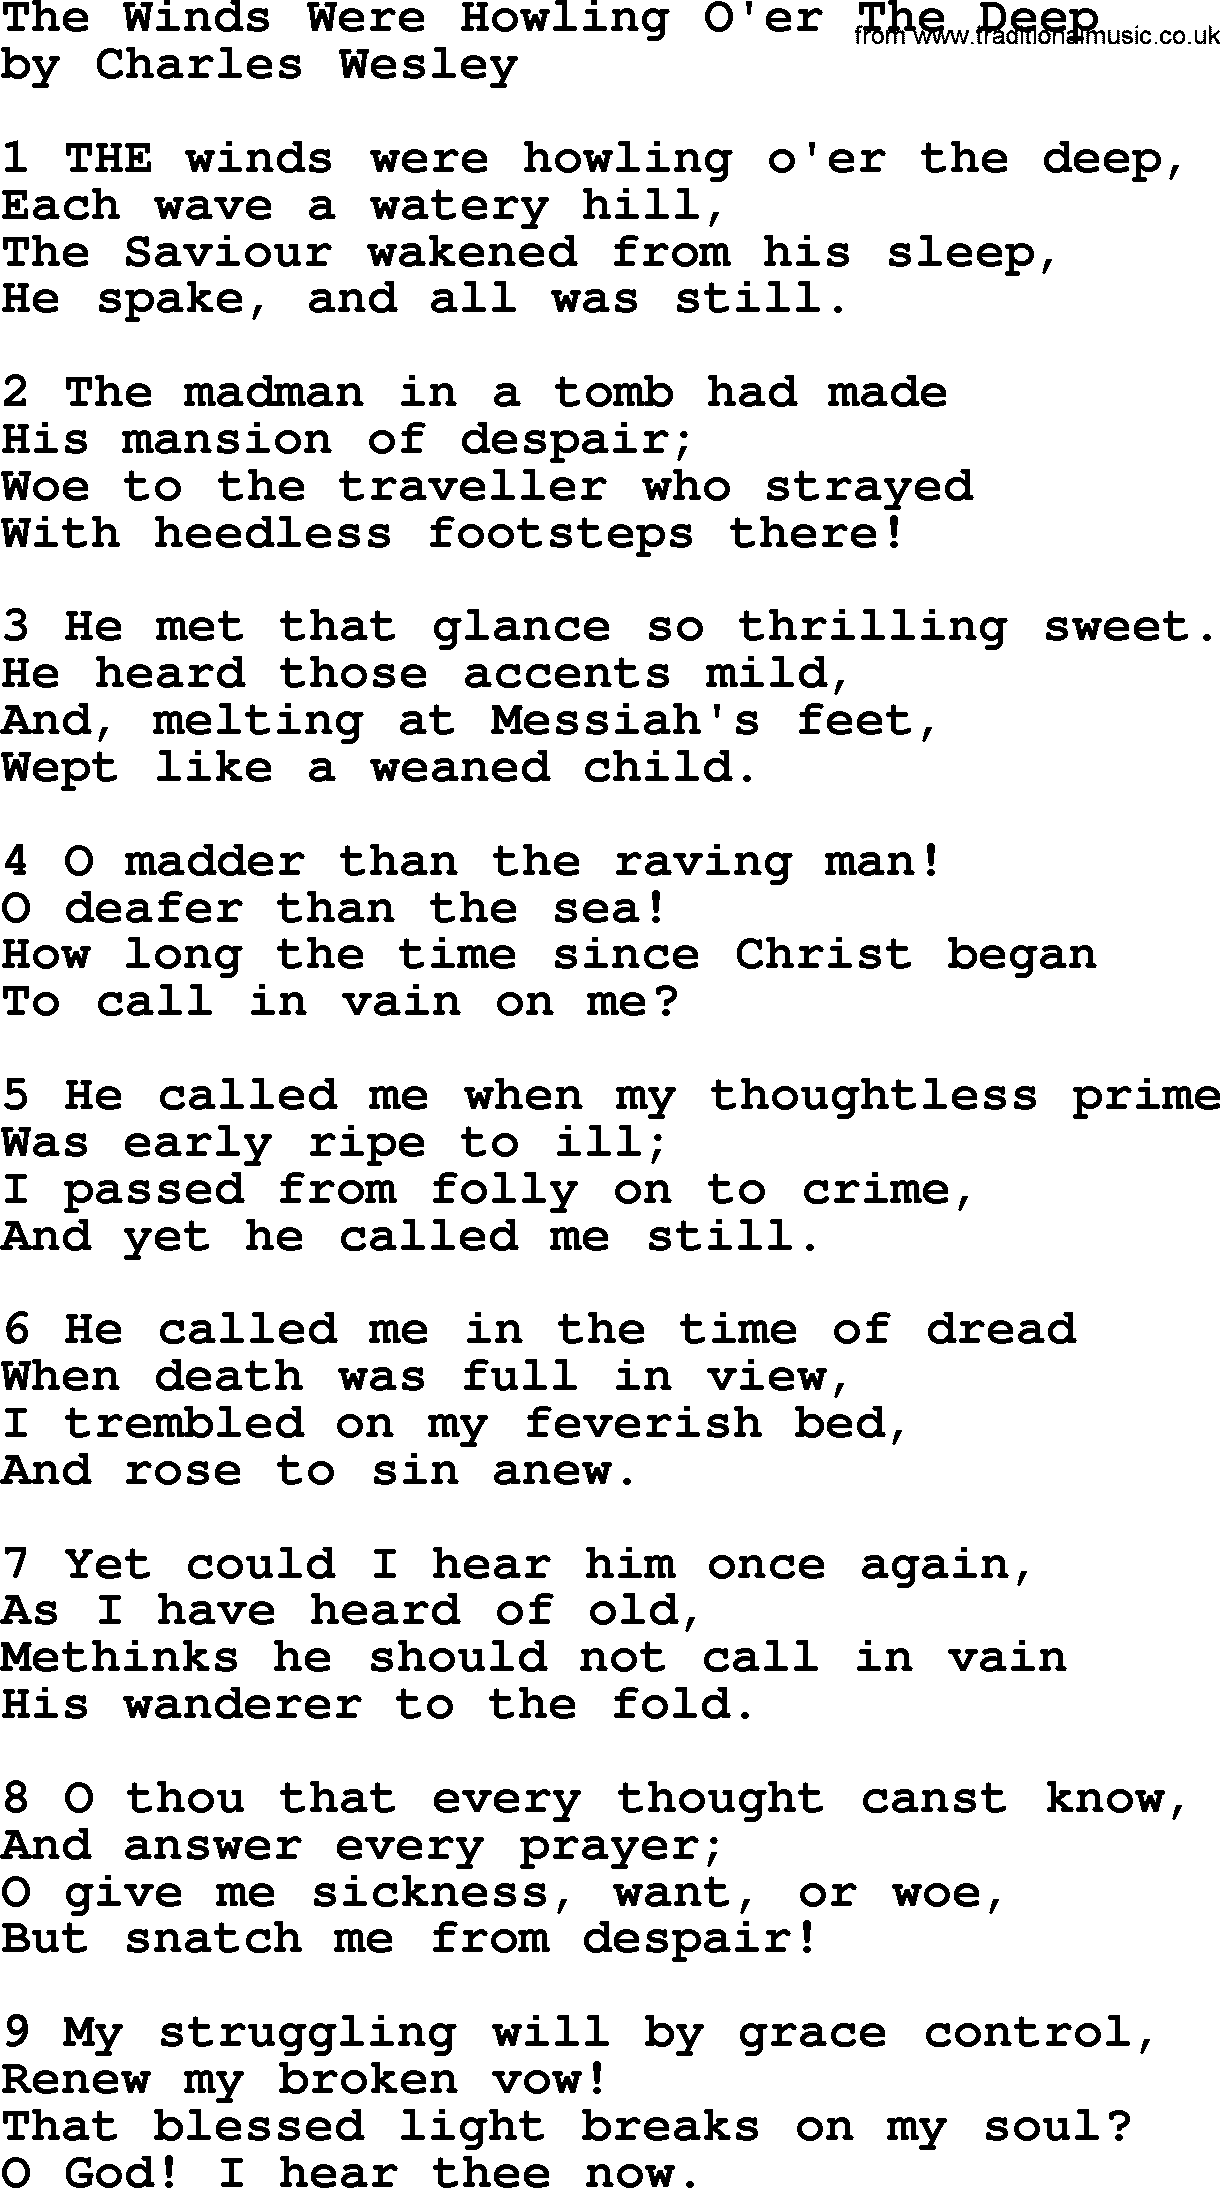 Charles Wesley hymn: The Winds Were Howling O'er The Deep, lyrics